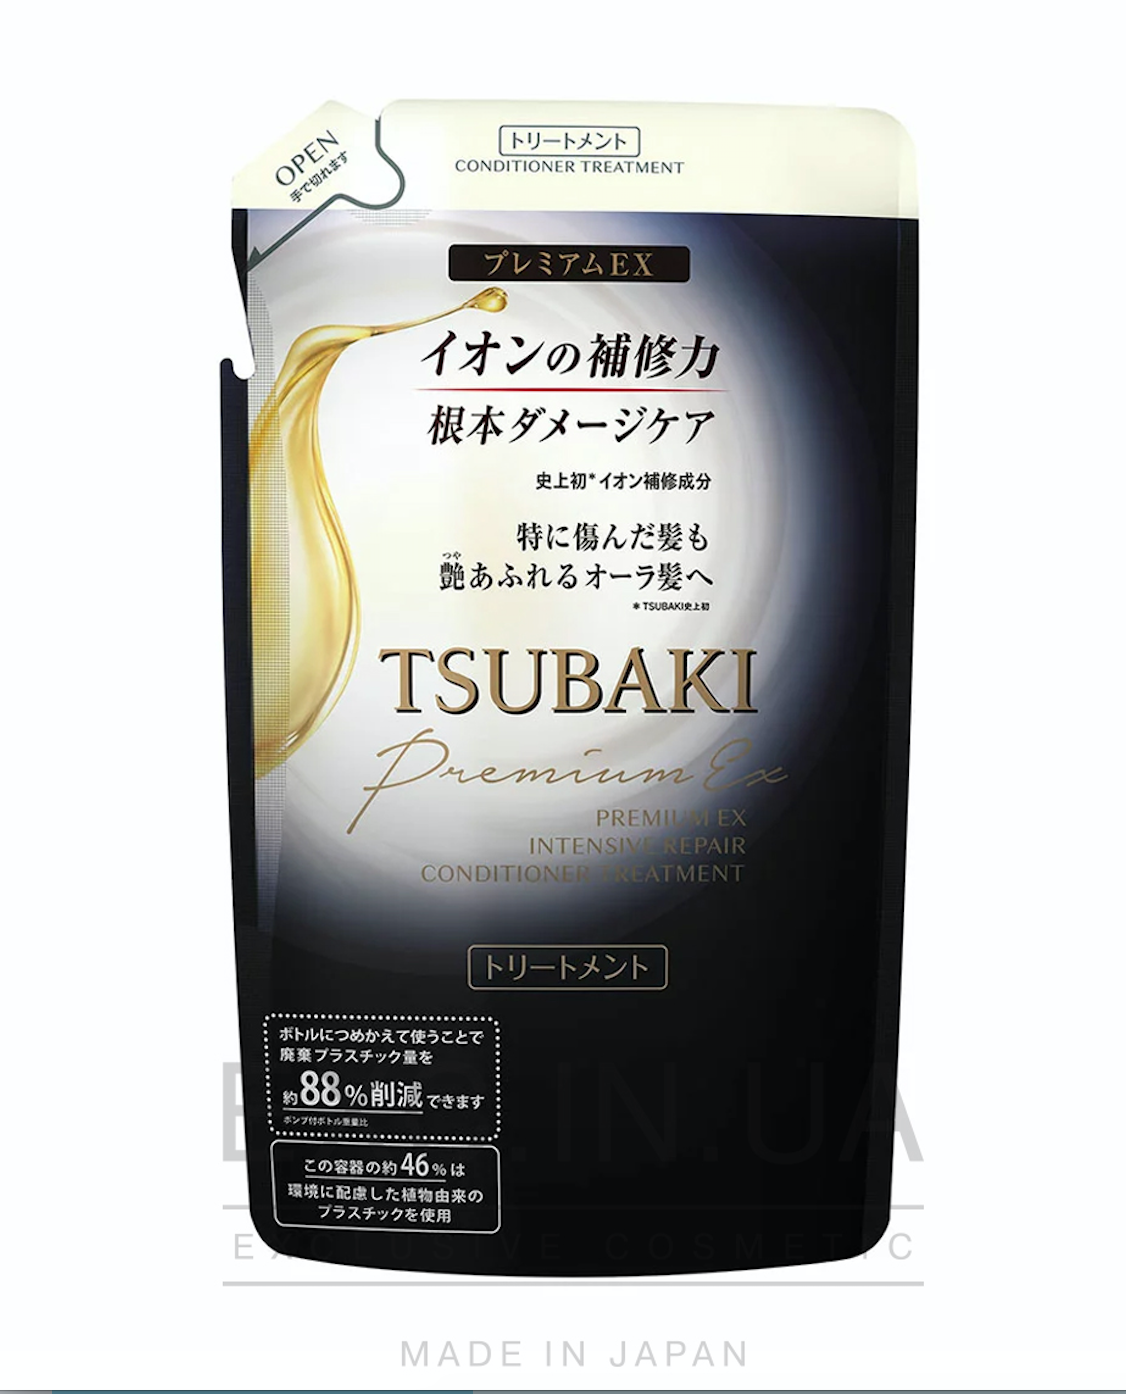 Shiseido Tsubaki Premium EX Intensive Repair Conditioner Treatment - Восстанавливающий кондиционер-маска для повреждённых волос